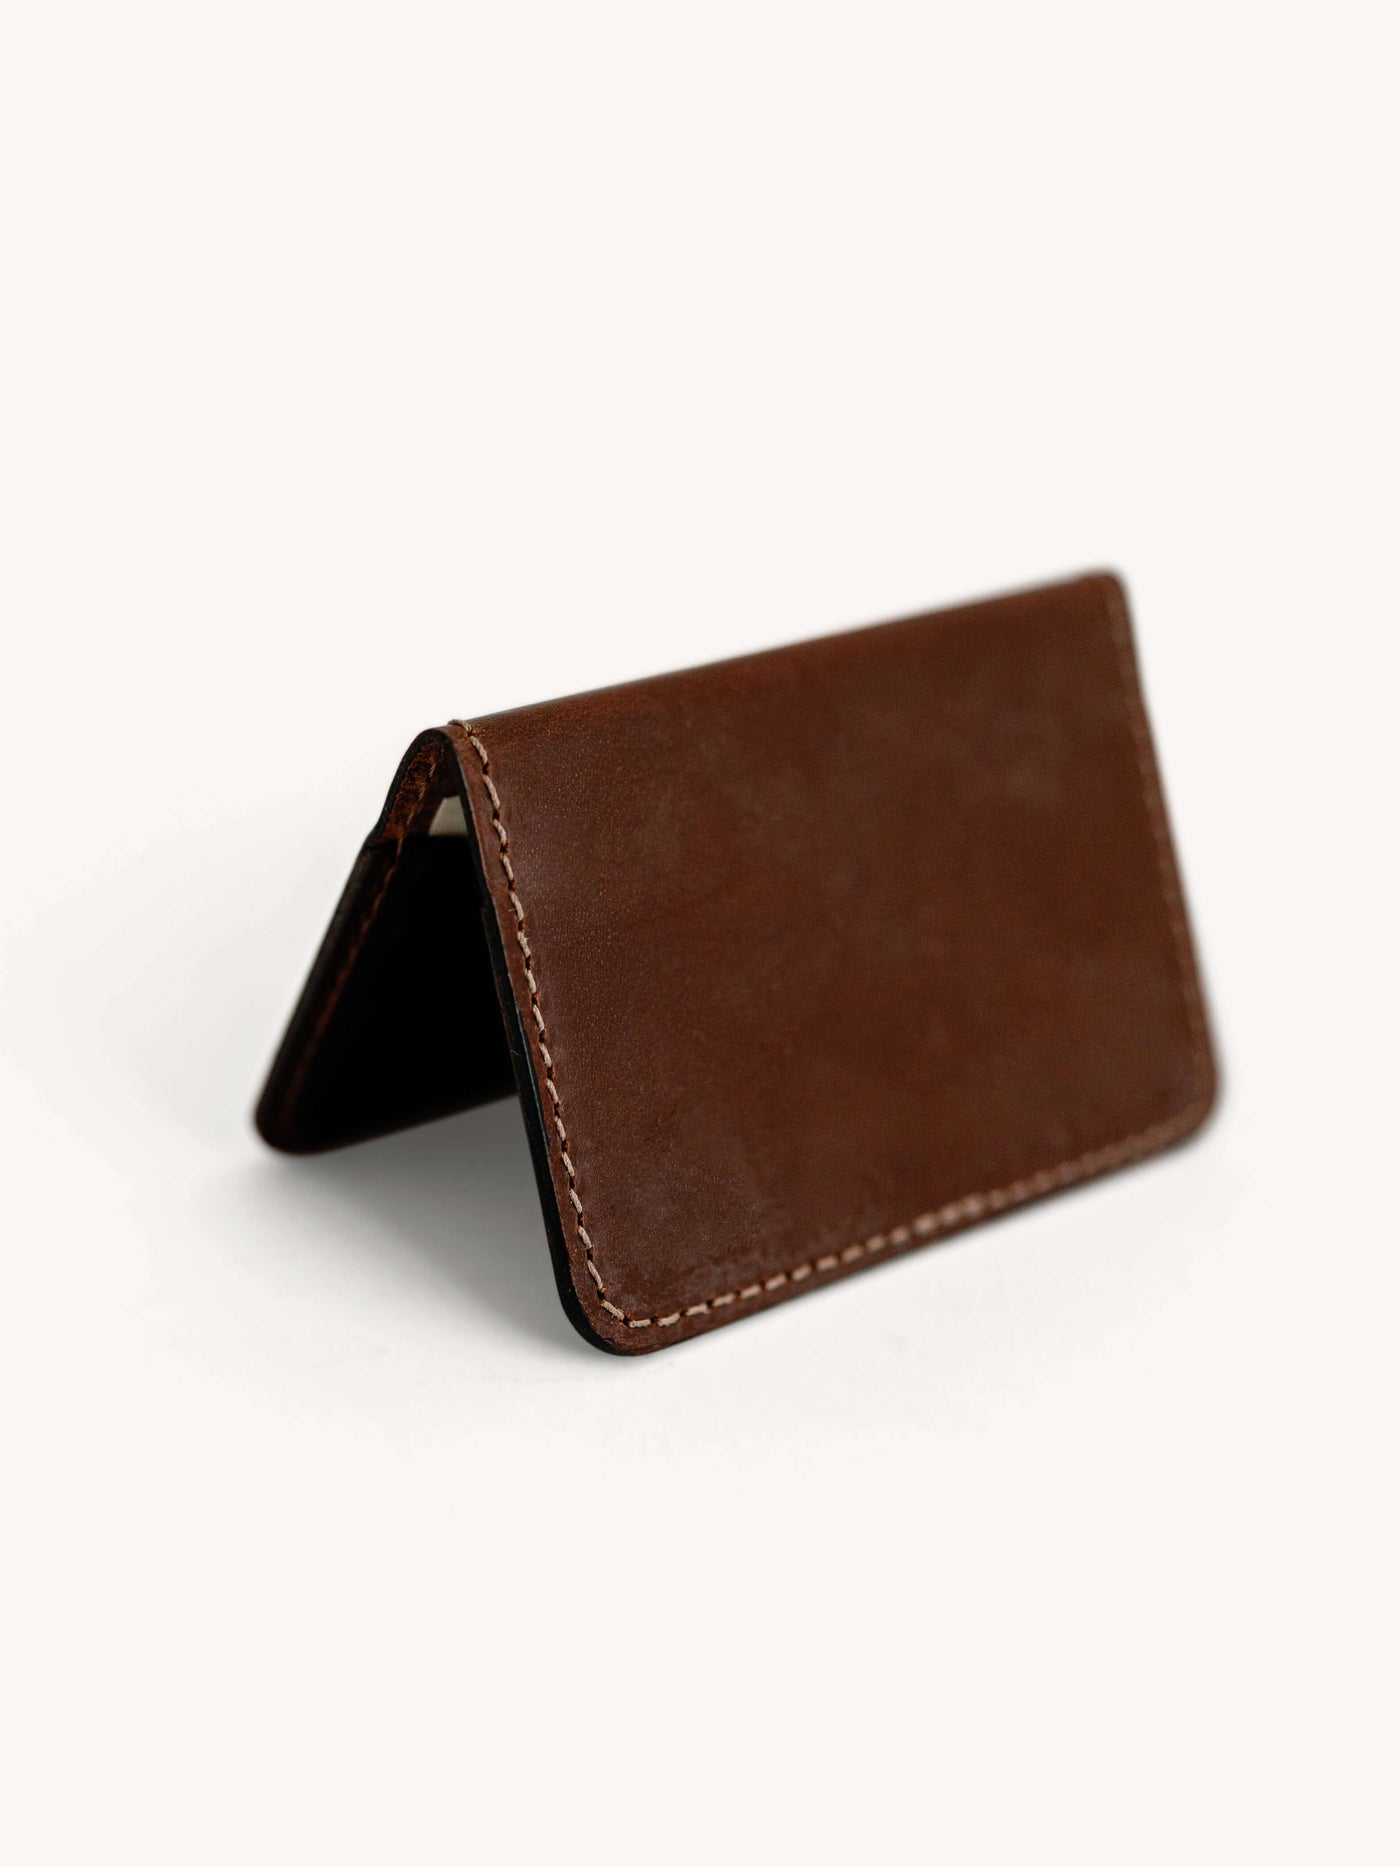 Slim Wallet – Clayton & Crume